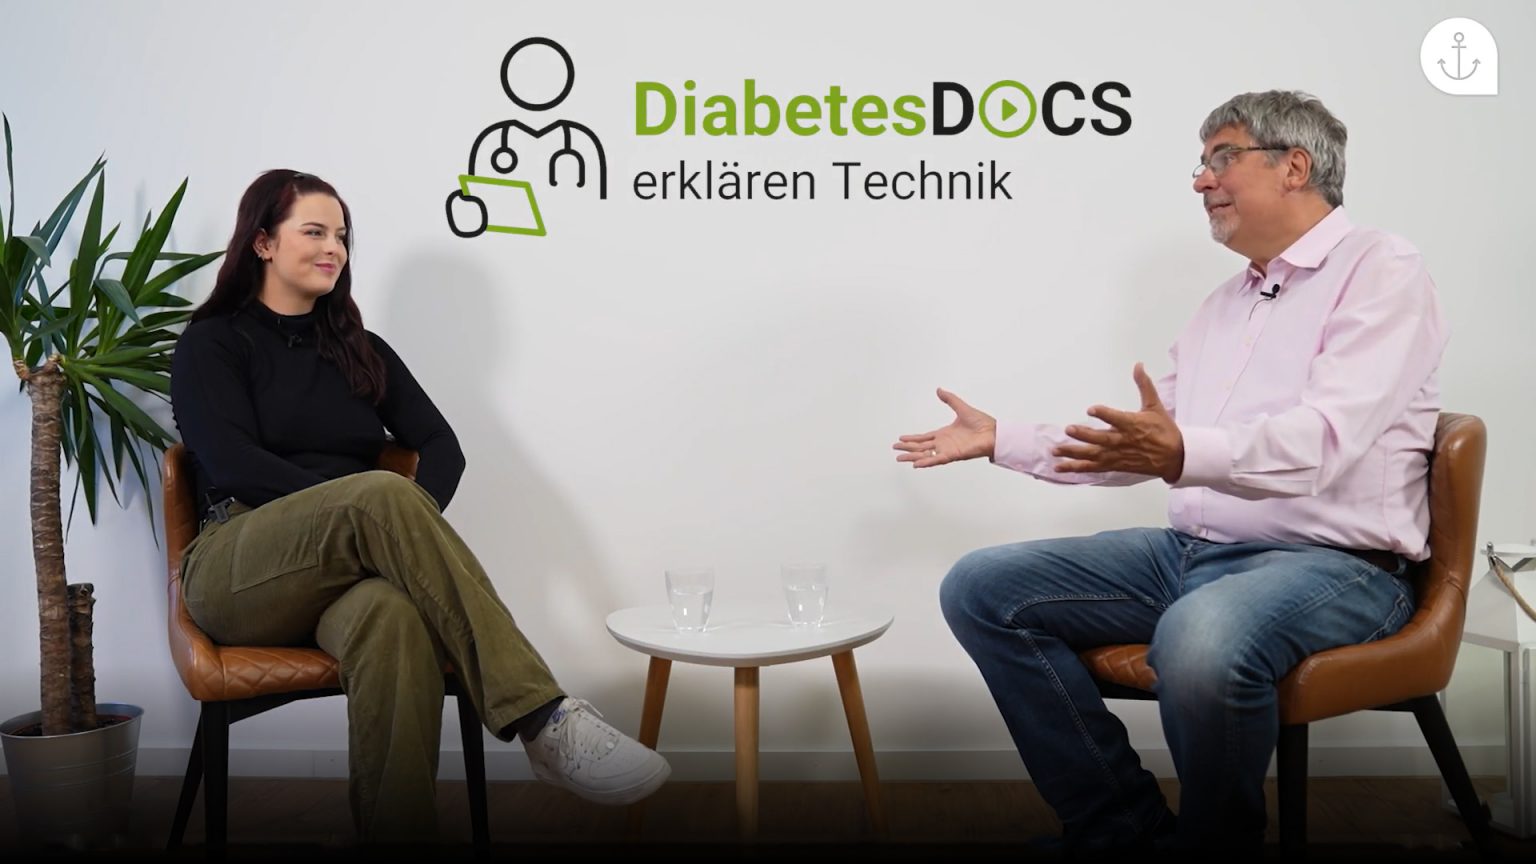 Diabetes-Docs erklären Technik – technologische Unterstützung bei der Therapie